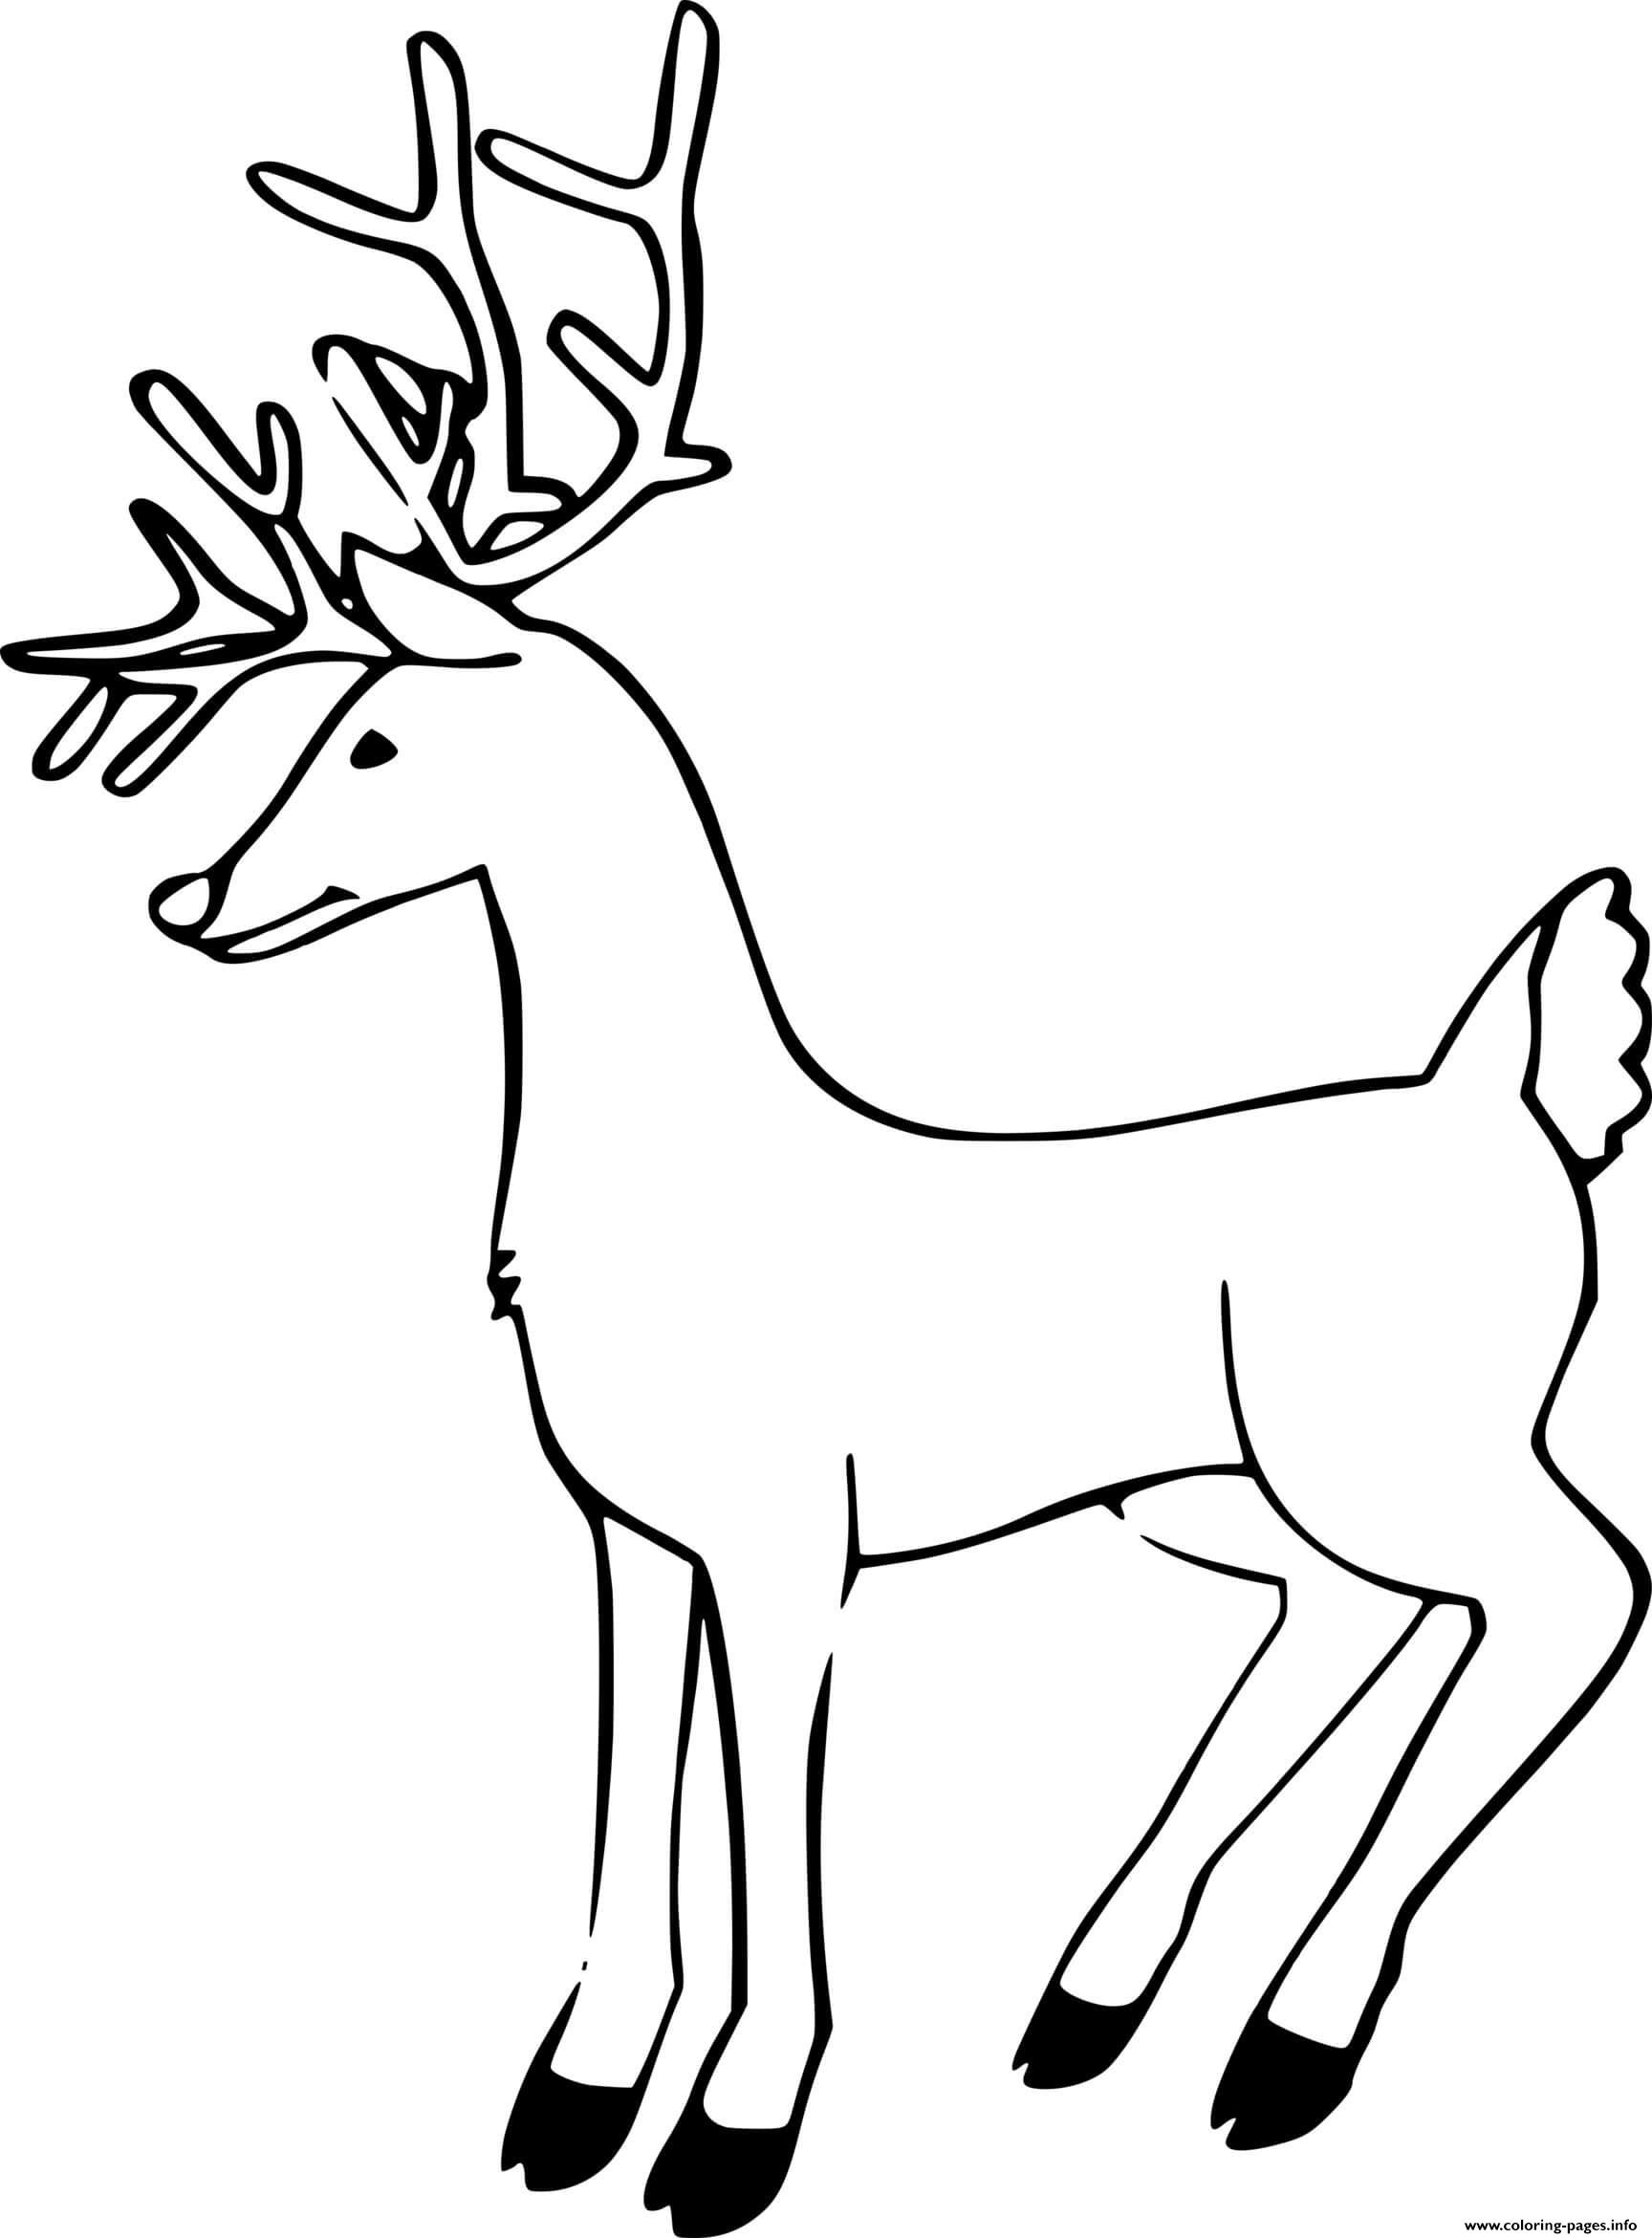 Thin Reindeer coloring